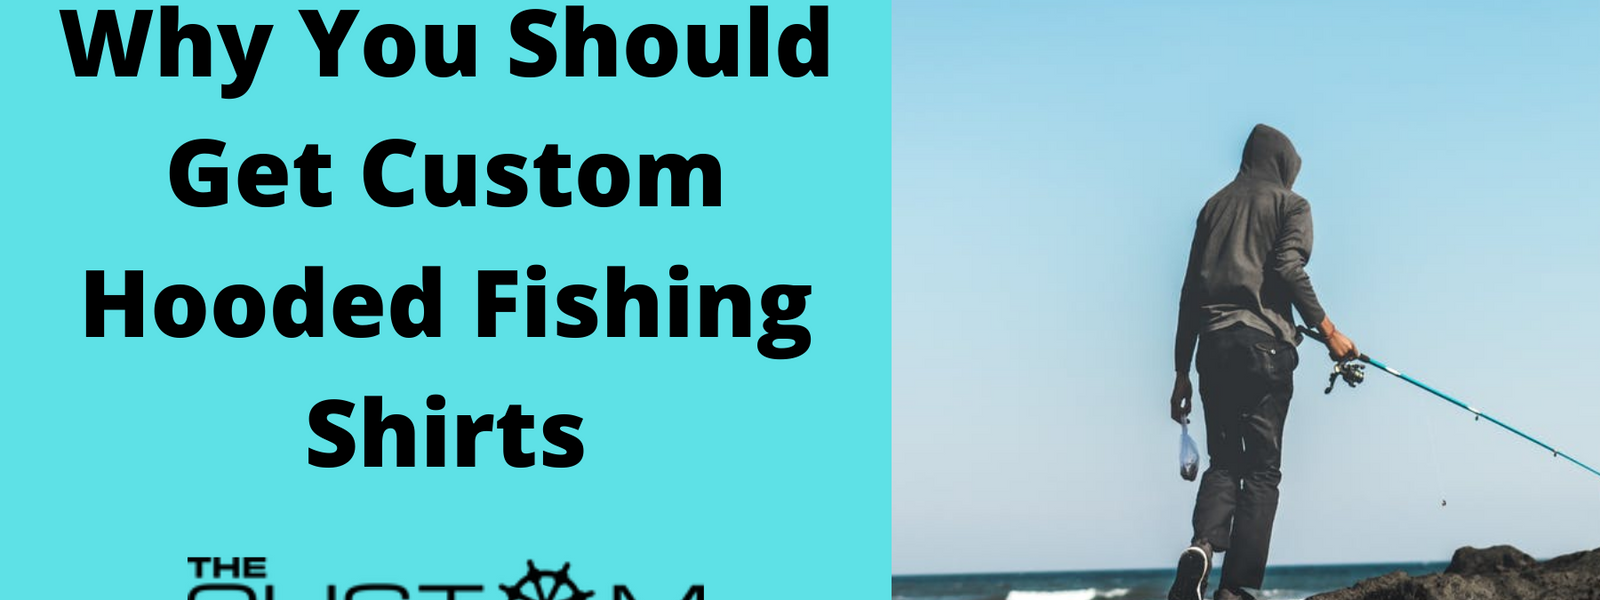 Why You Should Get Custom Hooded Fishing Shirts